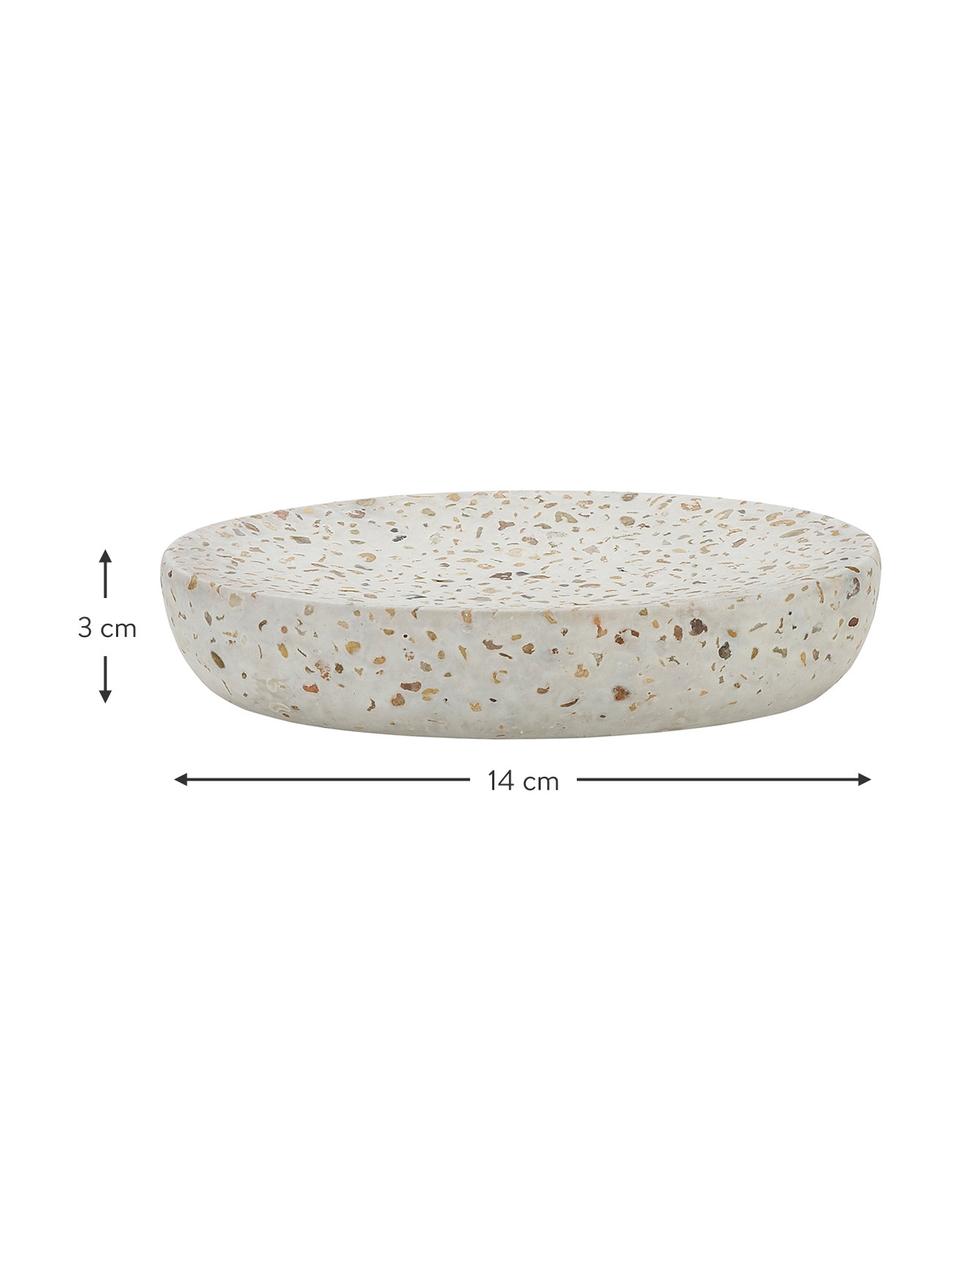 Mýdlenka Pebble, Terrazzo, Béžová, Š 14 cm, V 3 cm